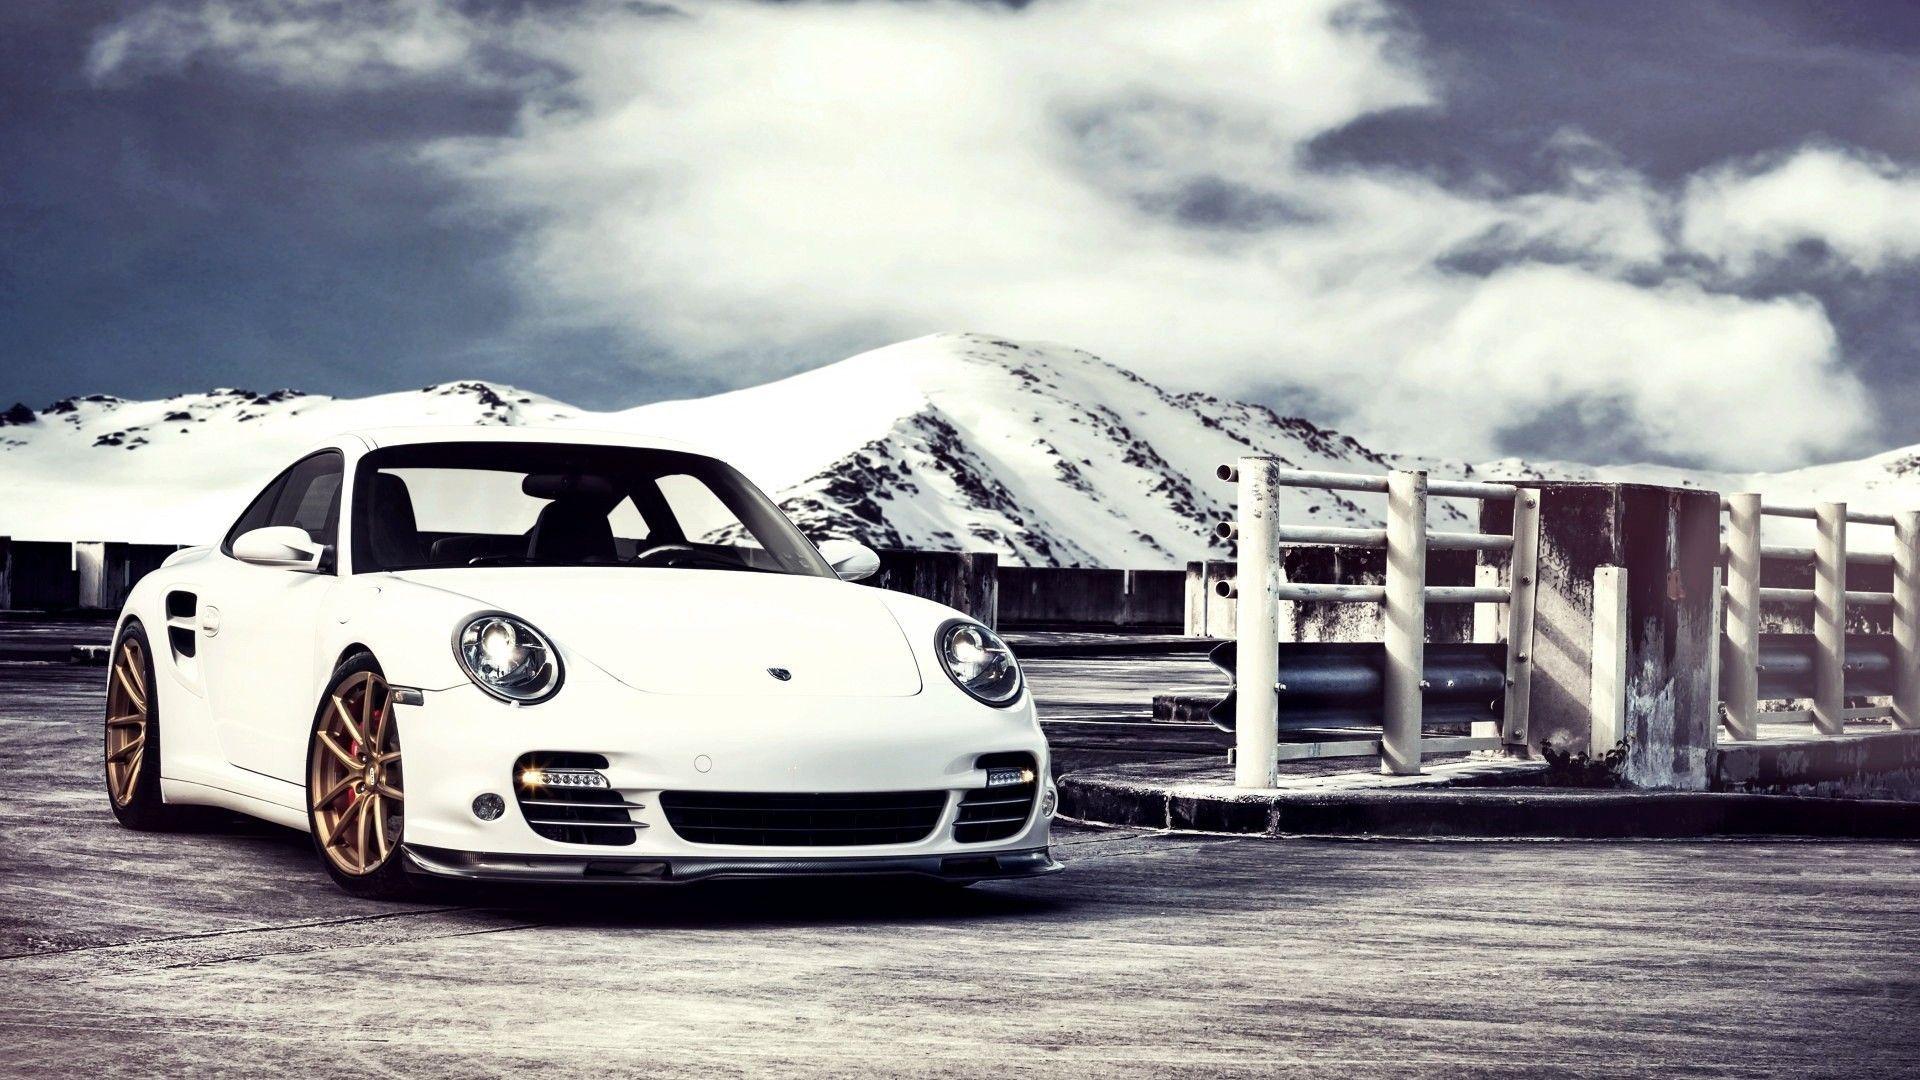 Excellent HD Porsche Wallpaper.com